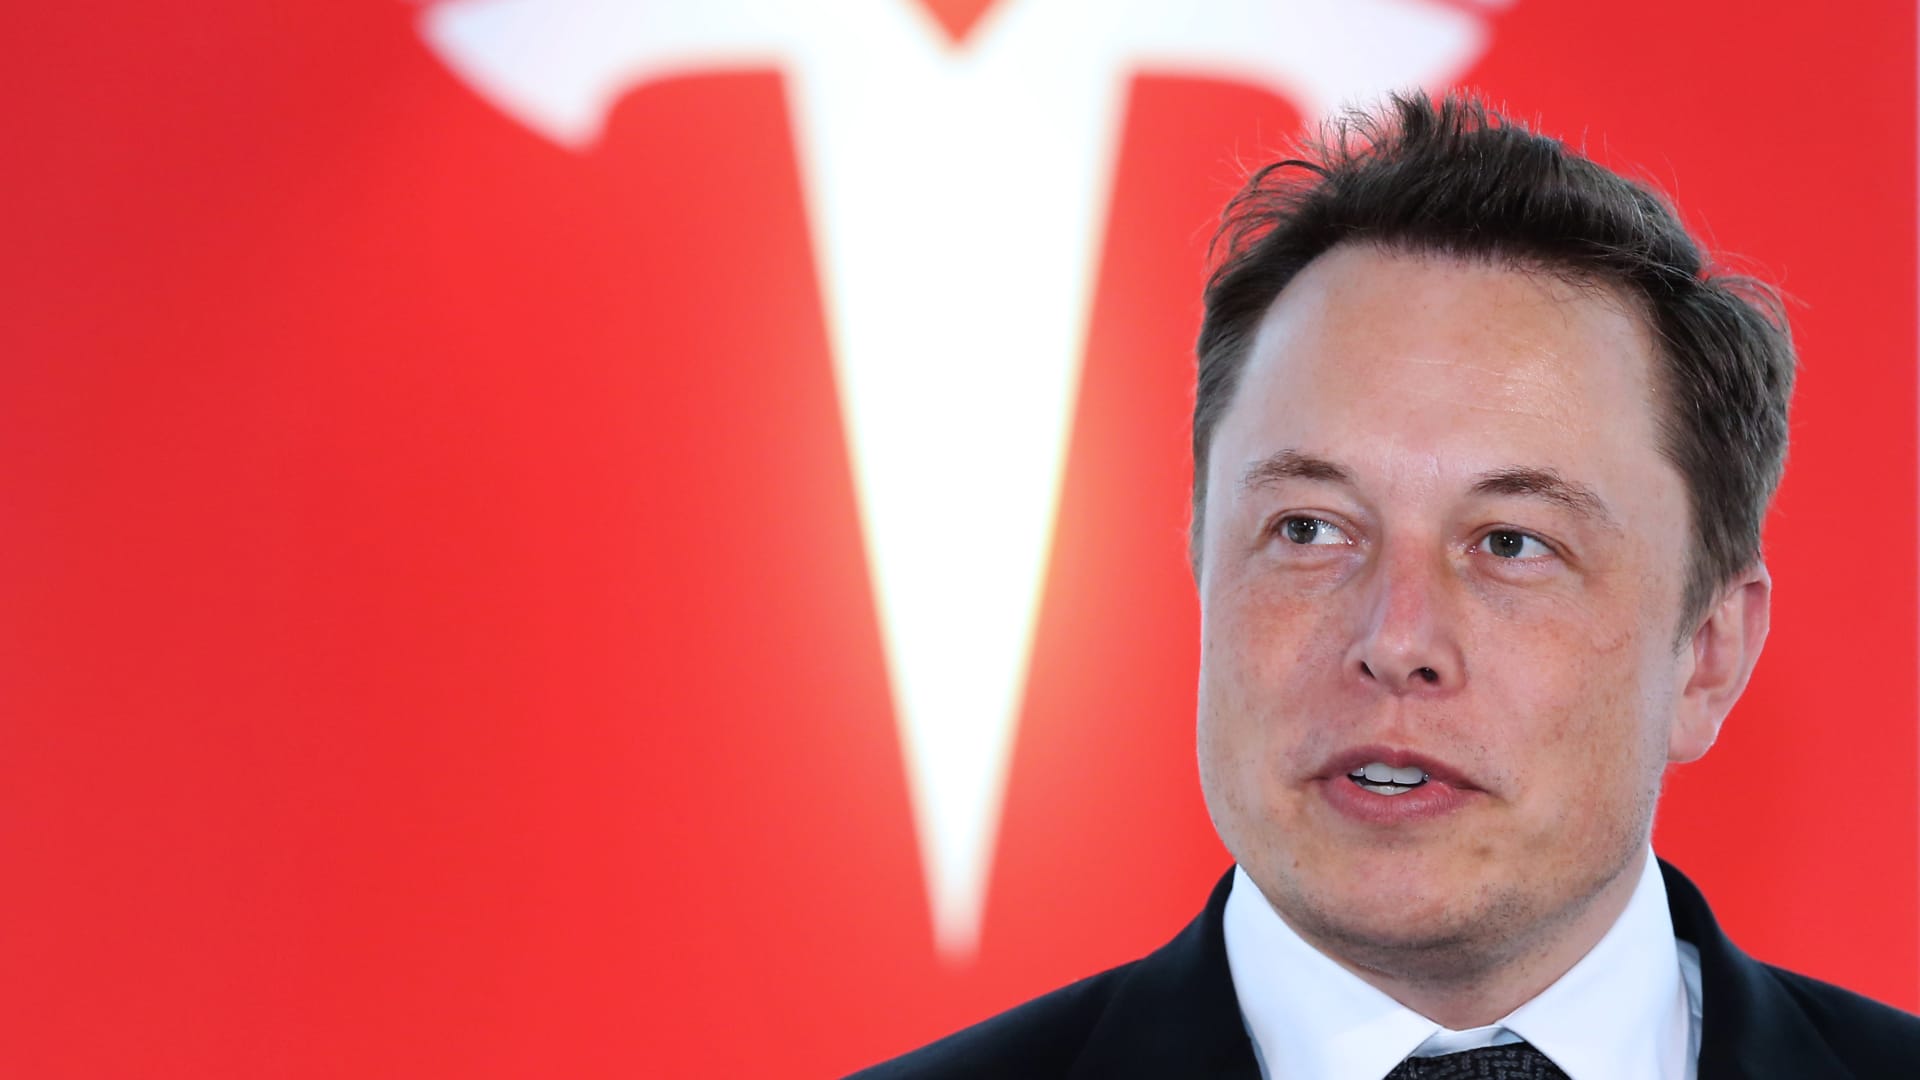 Elon Musk blasts Biden administration, Democrats on Twitter over ‘hate,’ sidelining of Tesla